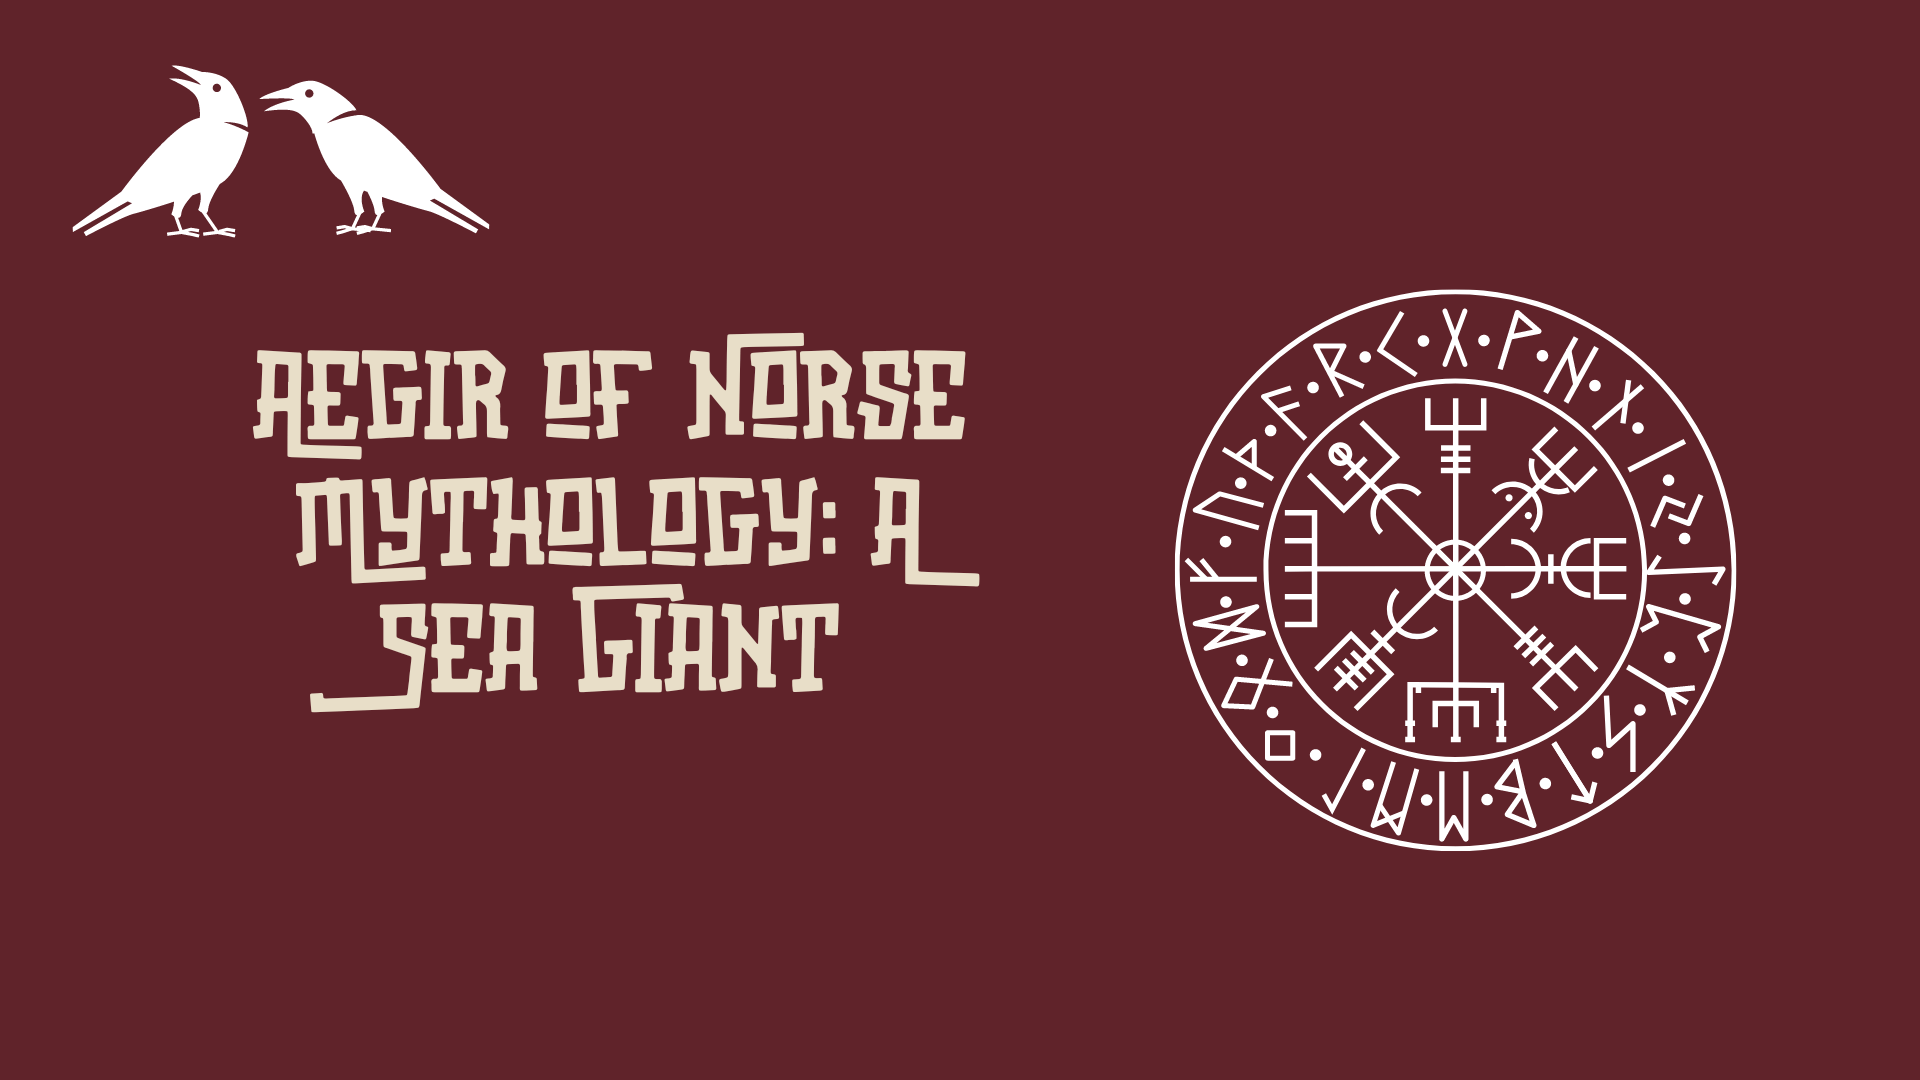 Aegir of Norse Mythology: A Sea Giant